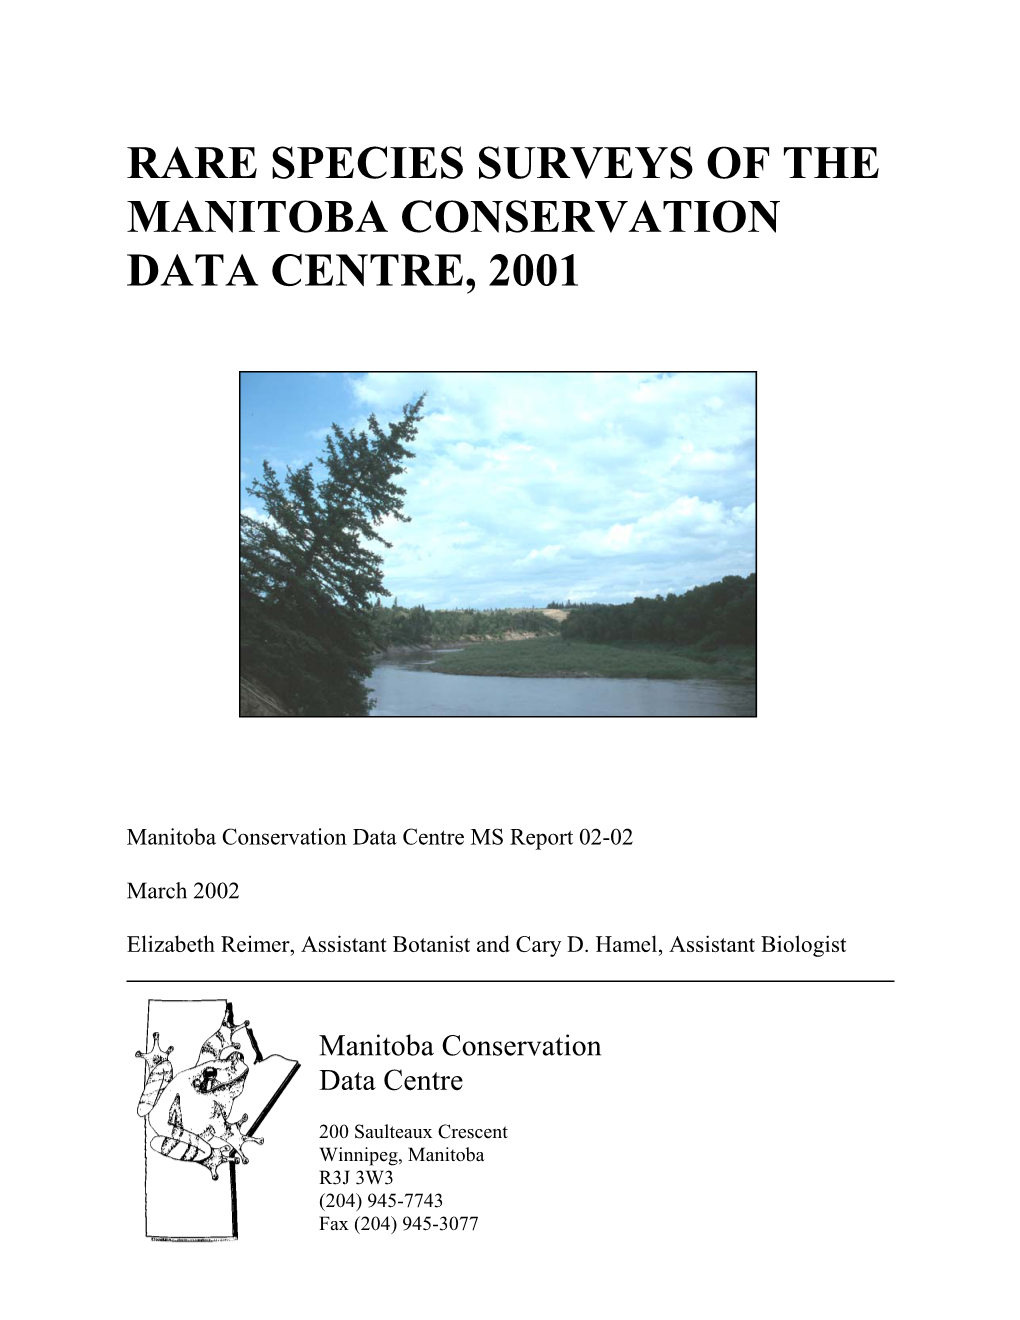 Rare Species Surveys of the Manitoba Conservation Data Centre, 2001